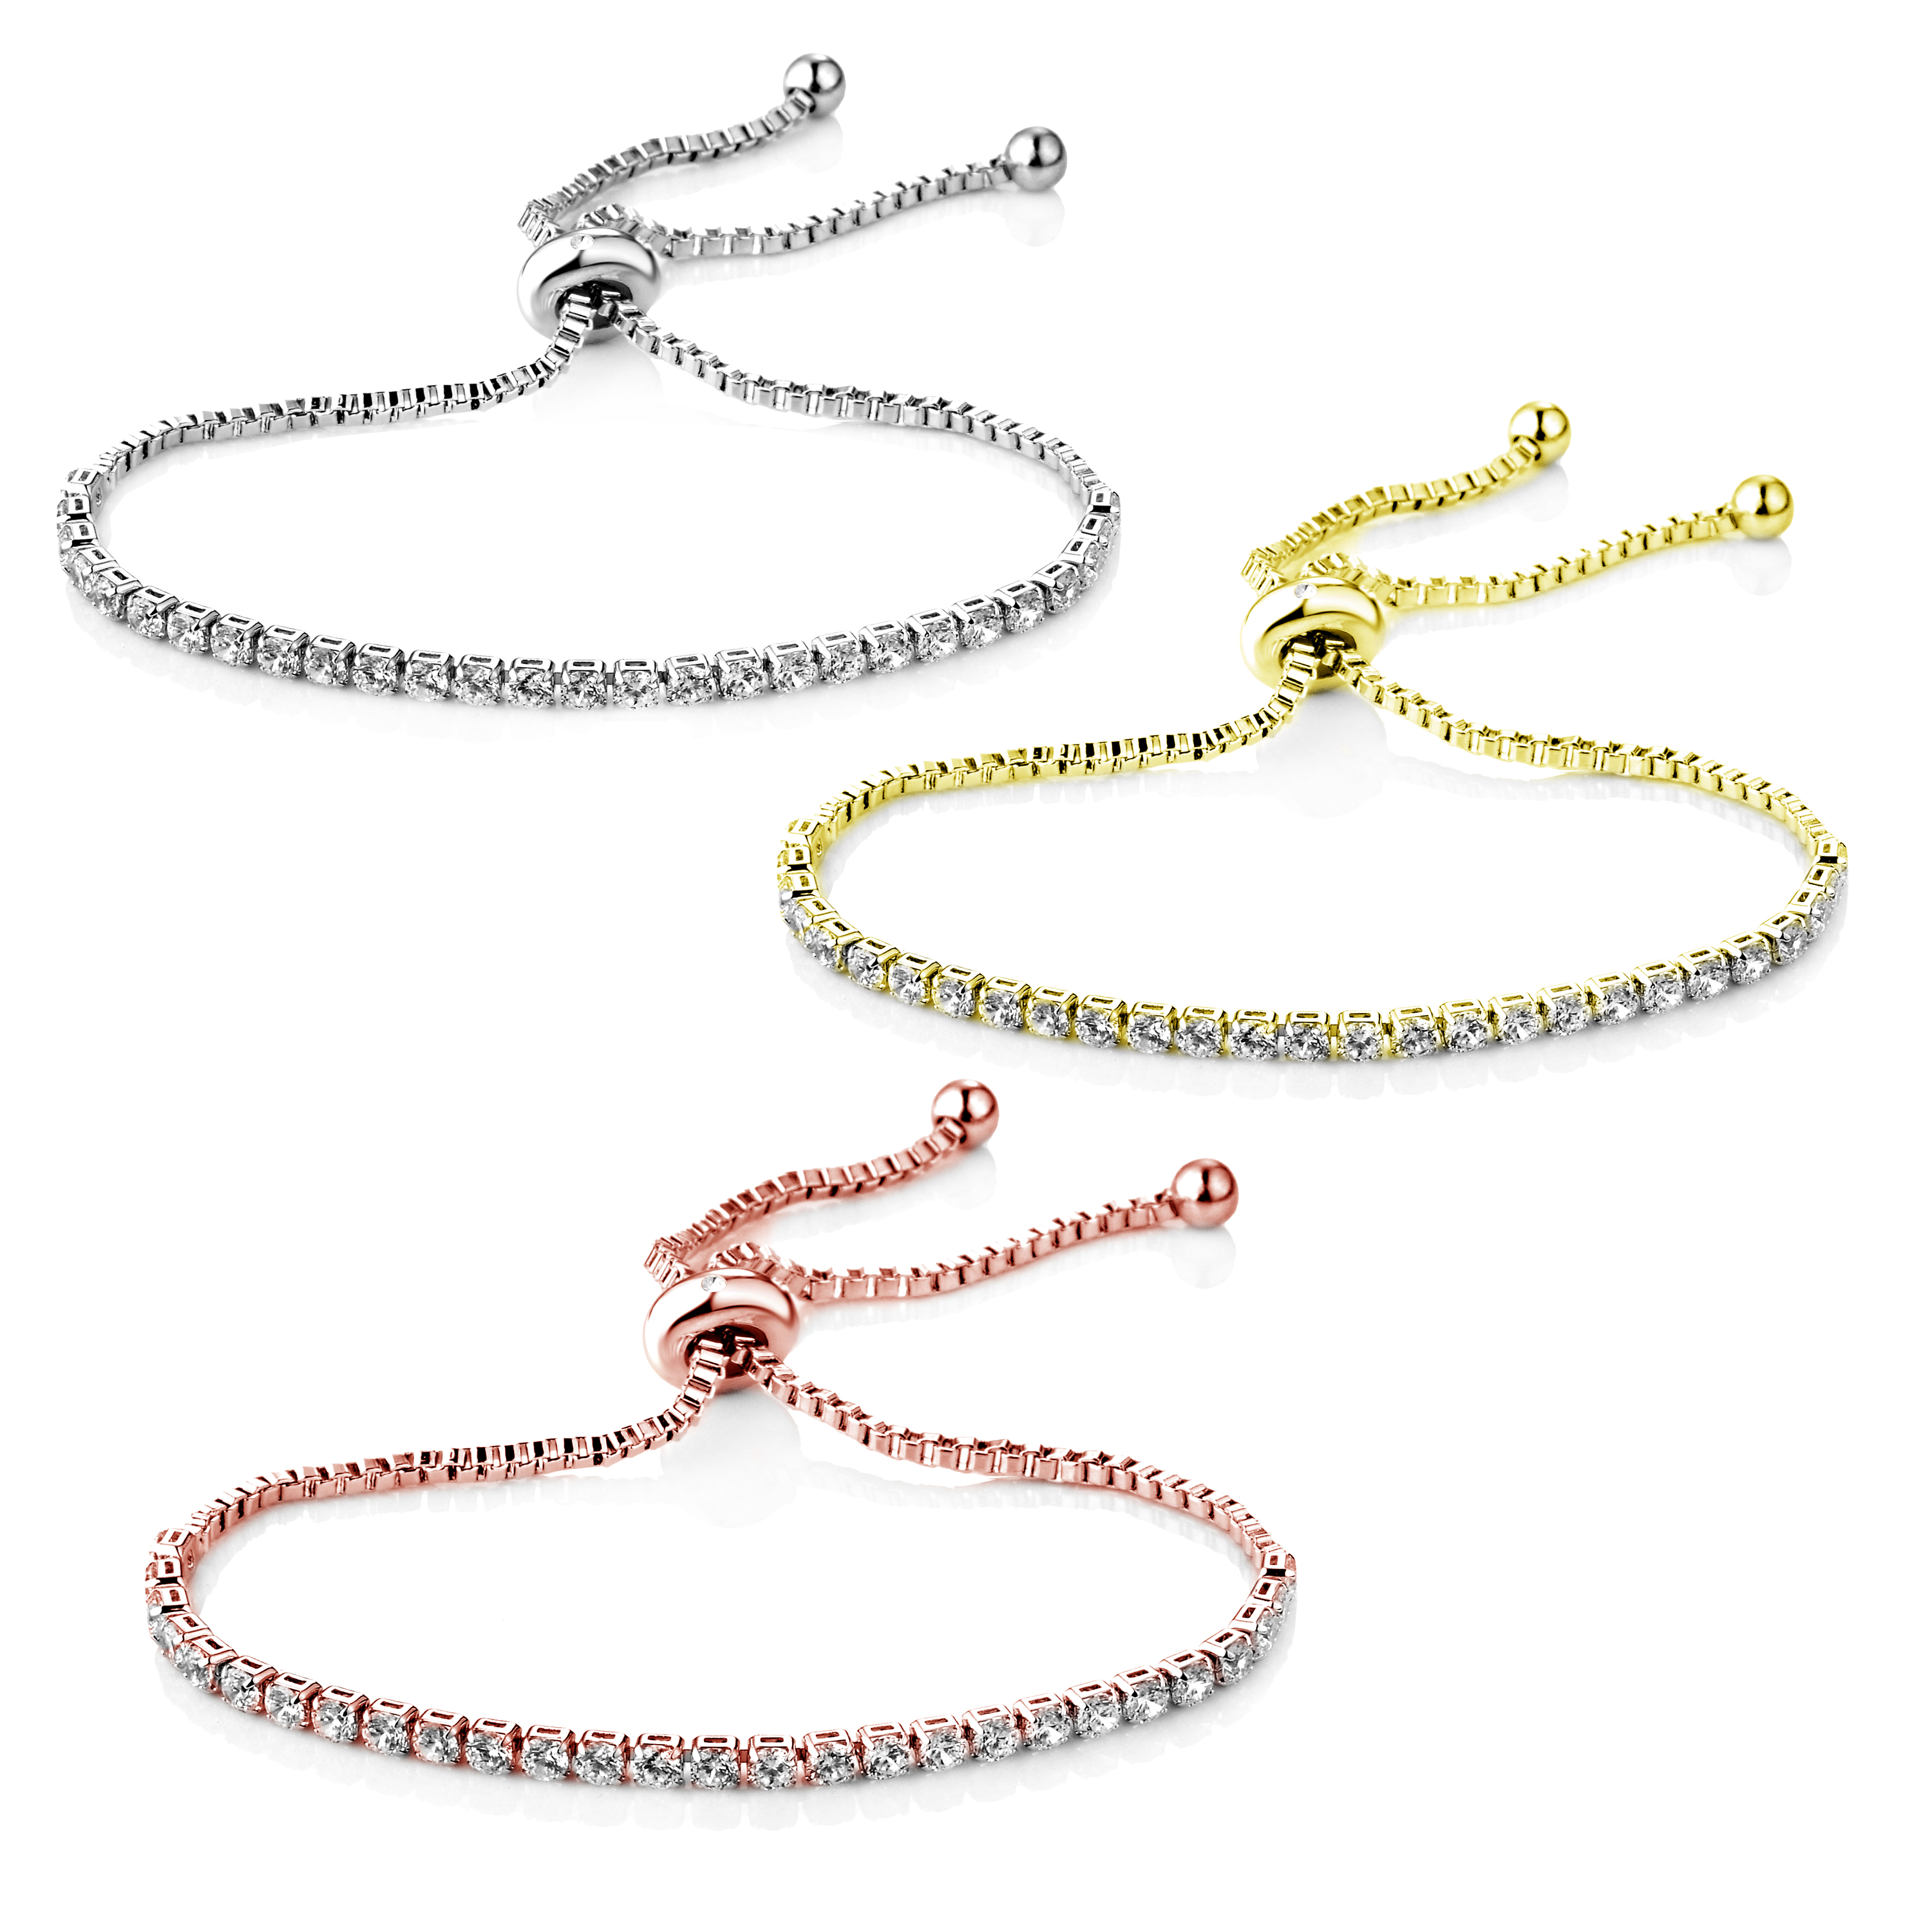 Set of Three Solitaire Friendship Bracelet Created with Zircondia® Crystals by Philip Jones Jewellery